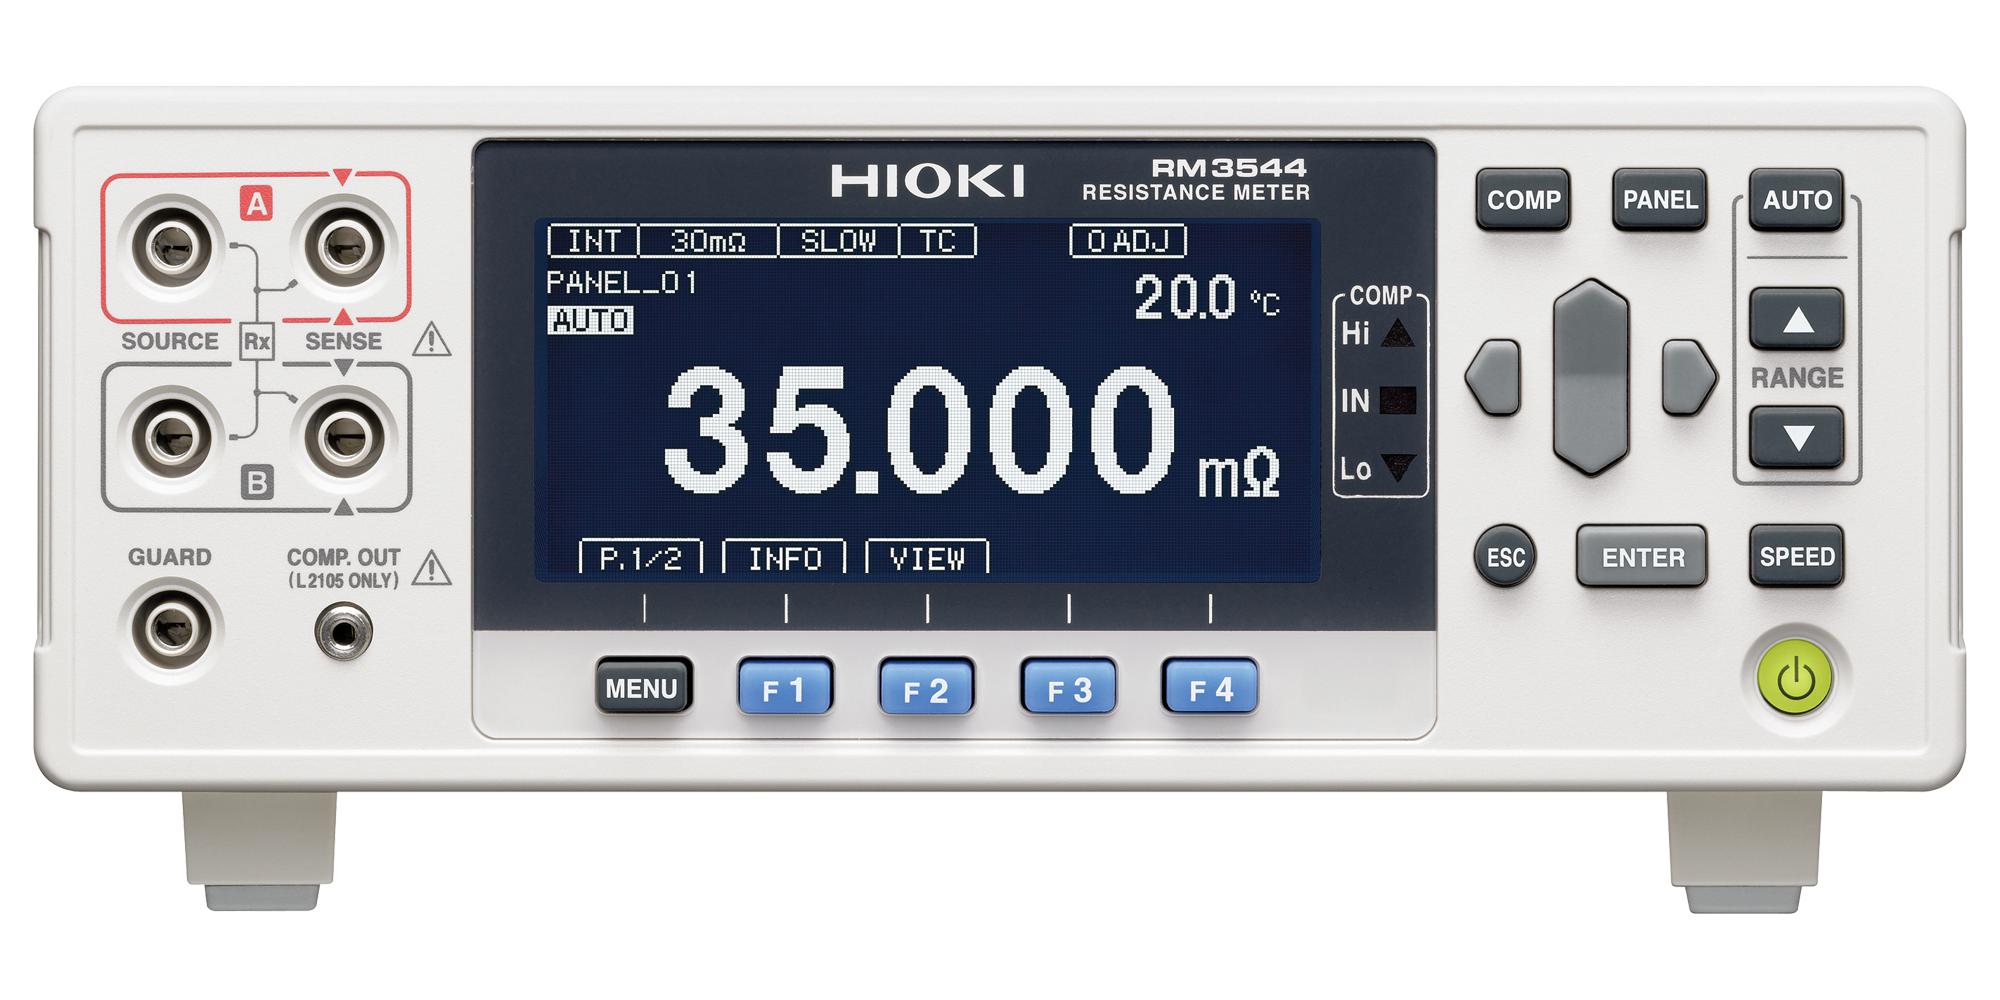 Hioki Rm3544-01 Resistance Meter, 0.02%, 3.5M Ohm